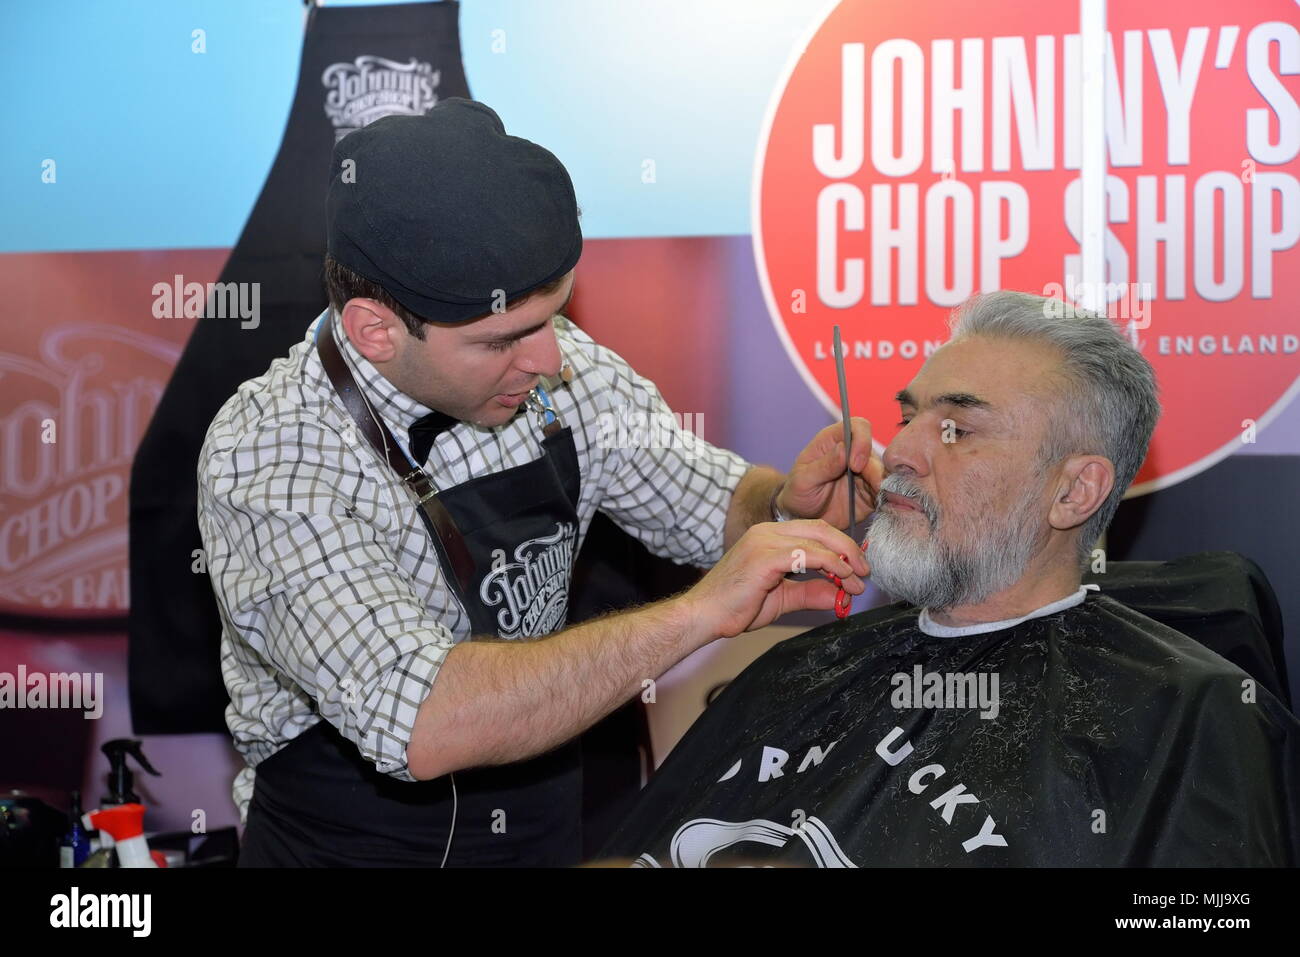 ST.PETERSBURG, Russia - 23 febbraio 2018: Master class stylist barba Jonny's Chop Shop al festival di bellezza Nevskie Berega a San Pietroburgo Foto Stock